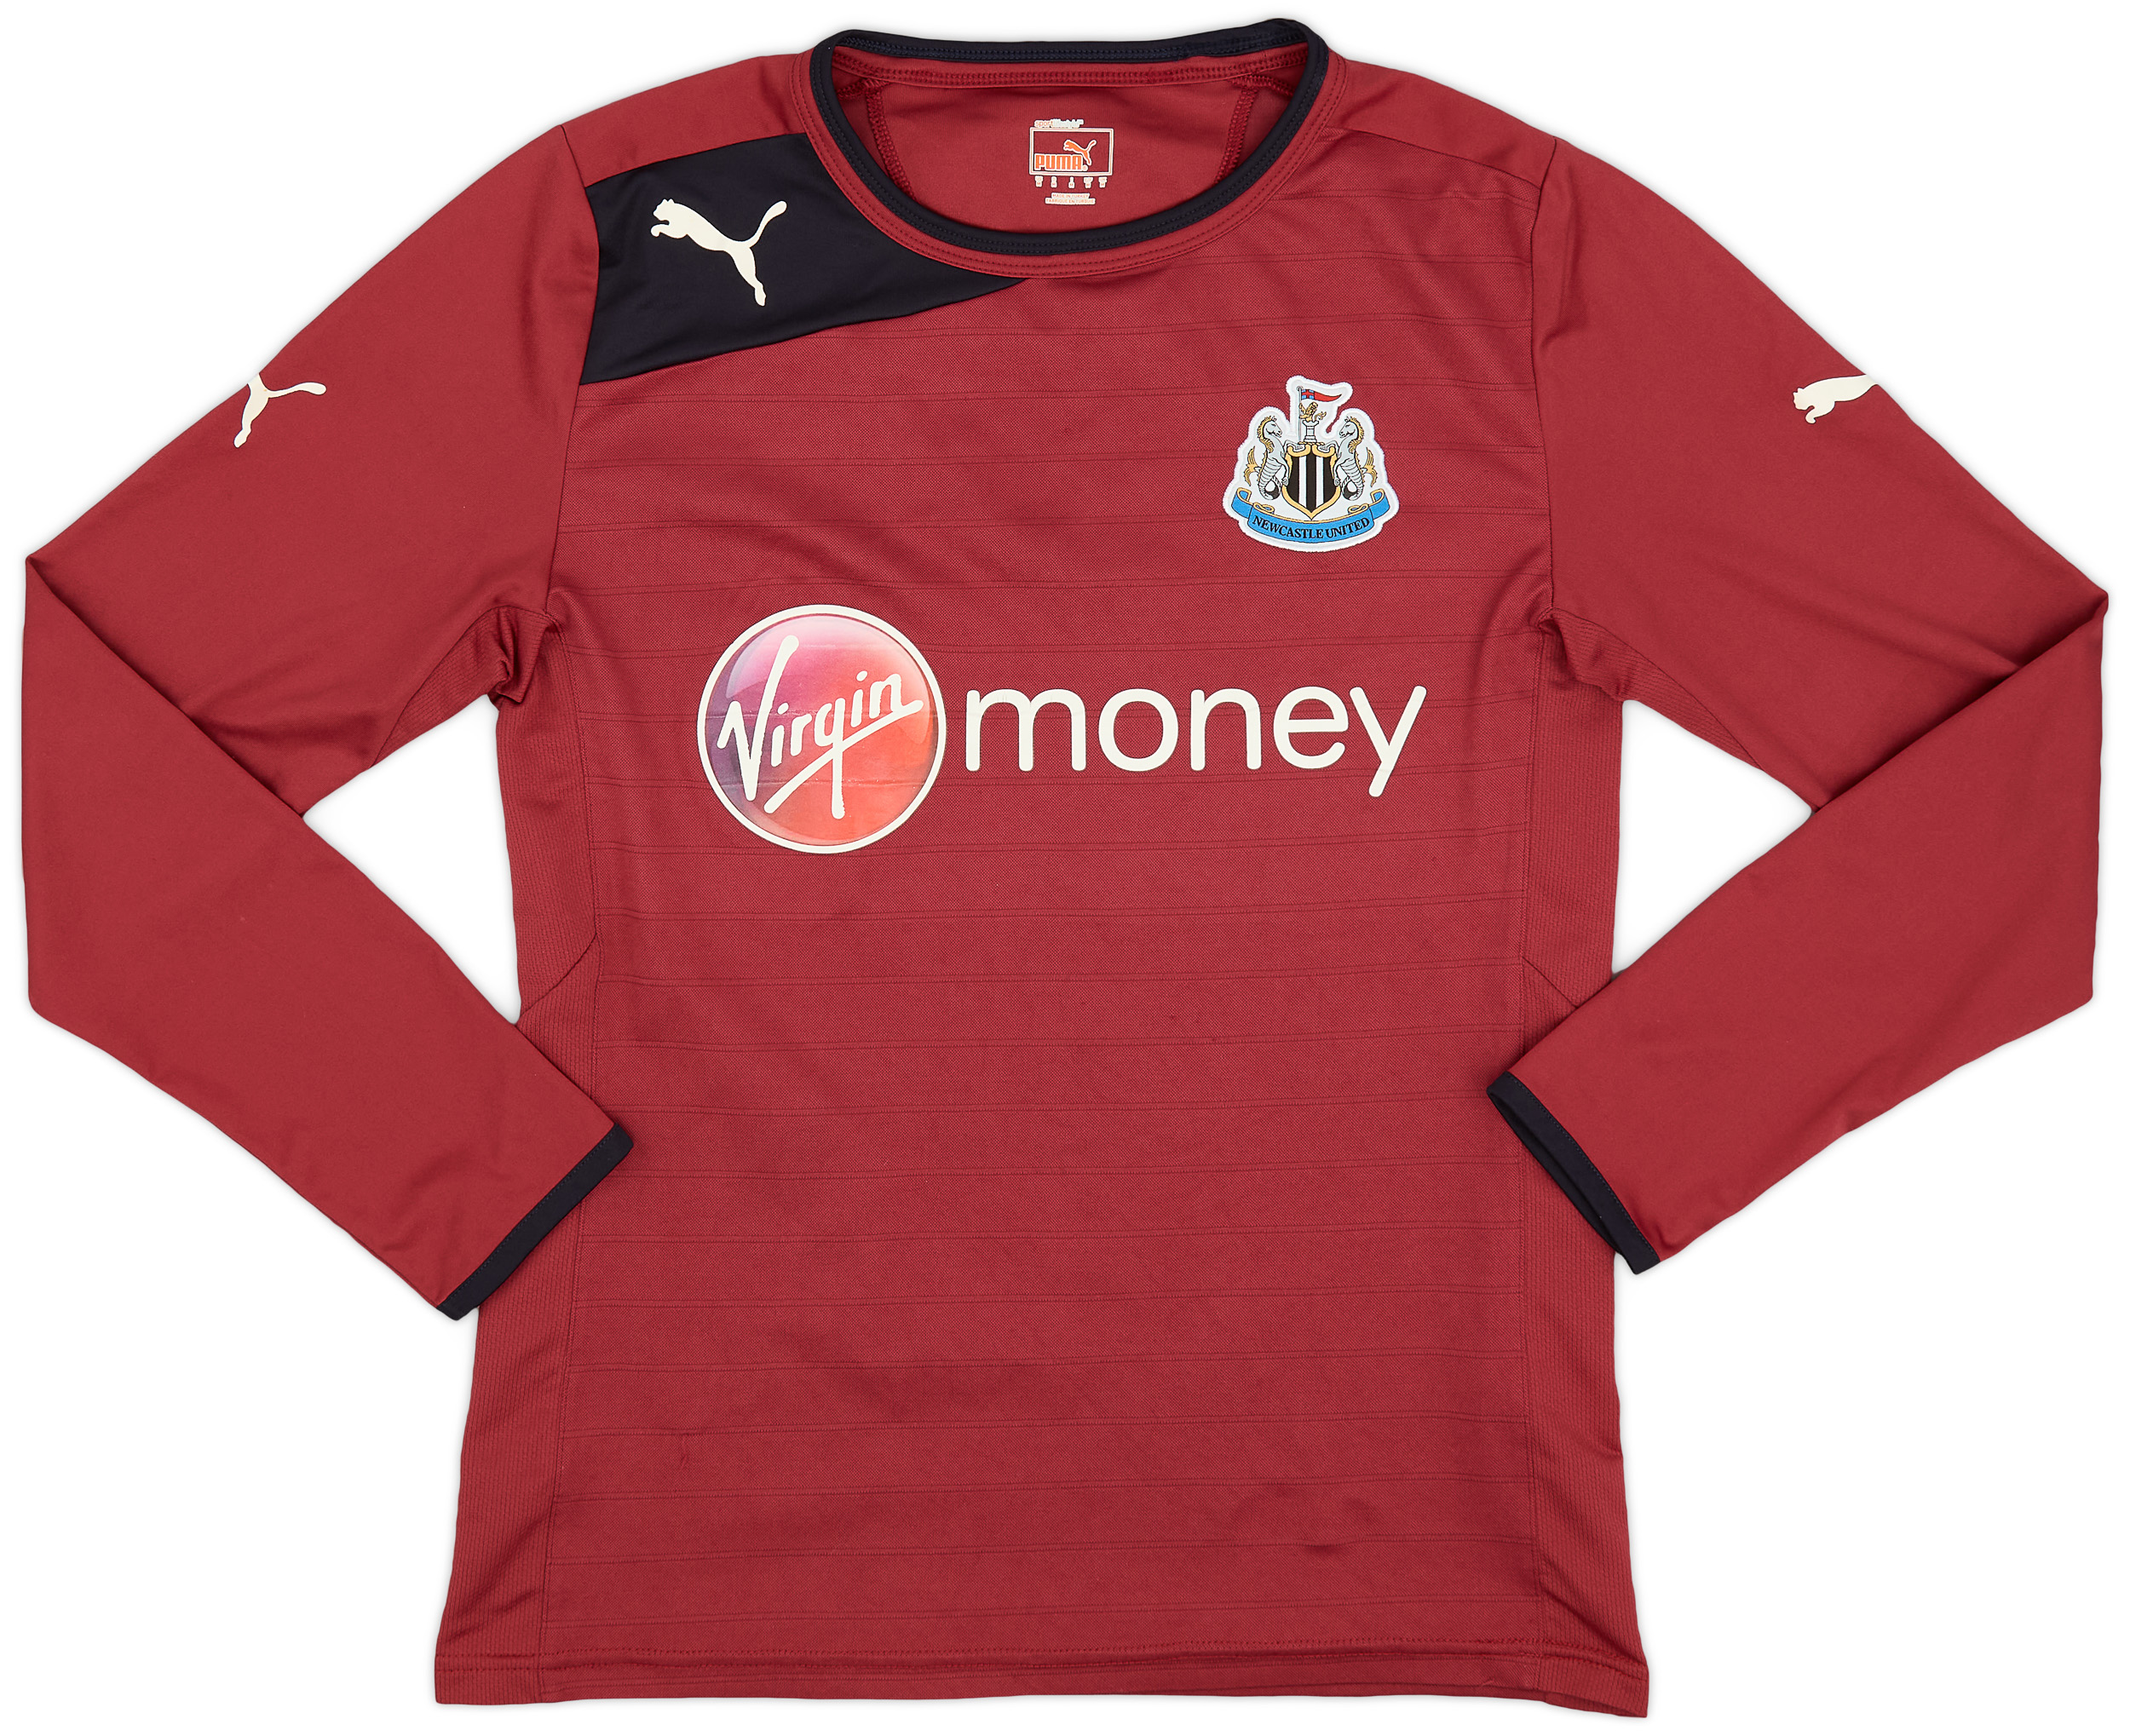 2011-12 Newcastle United Away Shirt - 6/10 - ()